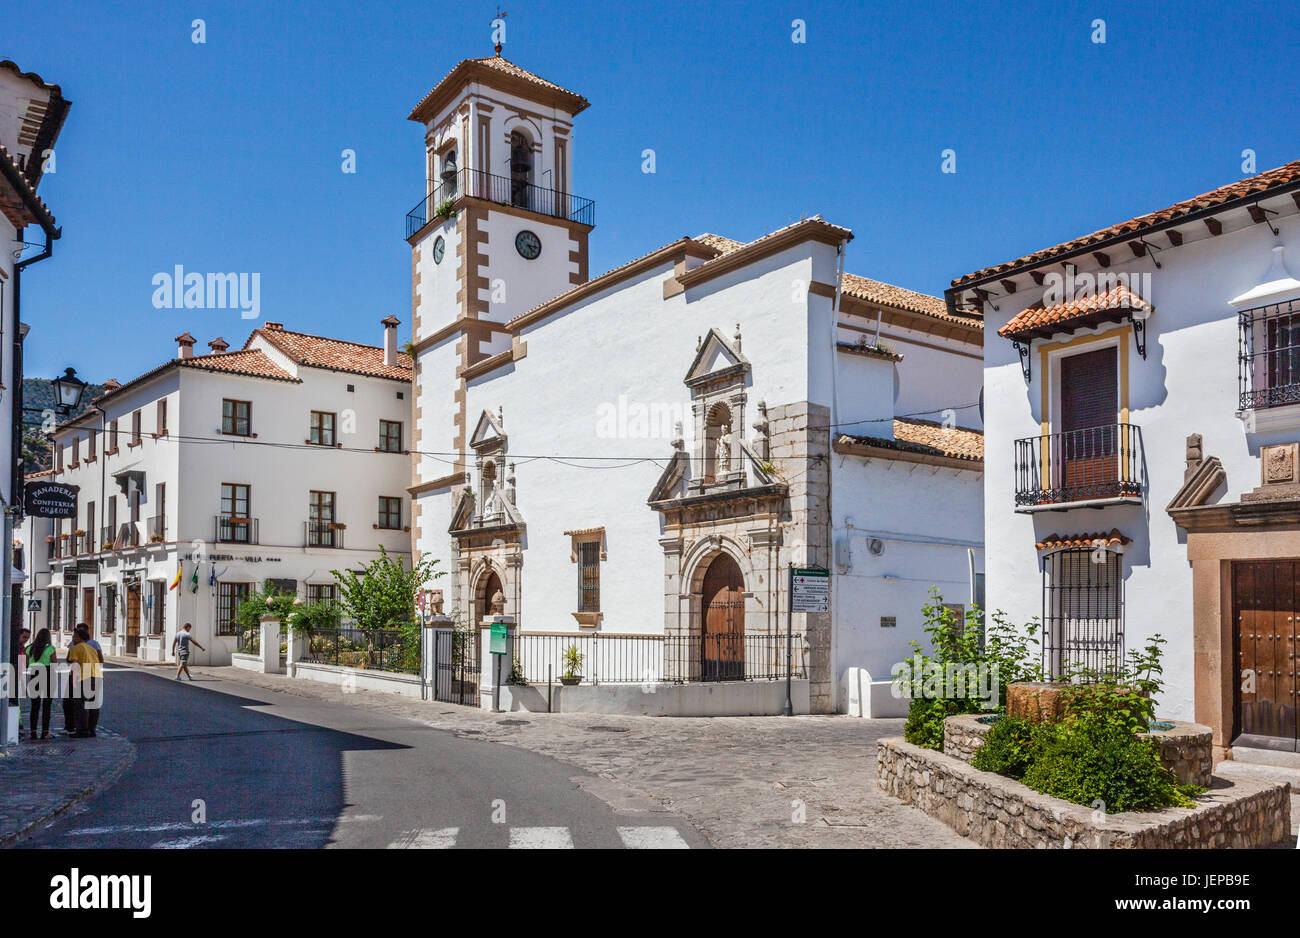 Spain, Andalusia, Province of Cadiz, Iglesia de Nuestra Senora de la Encarnacion, parish church of the Incarnation in the village of Grazalema Stock Photo